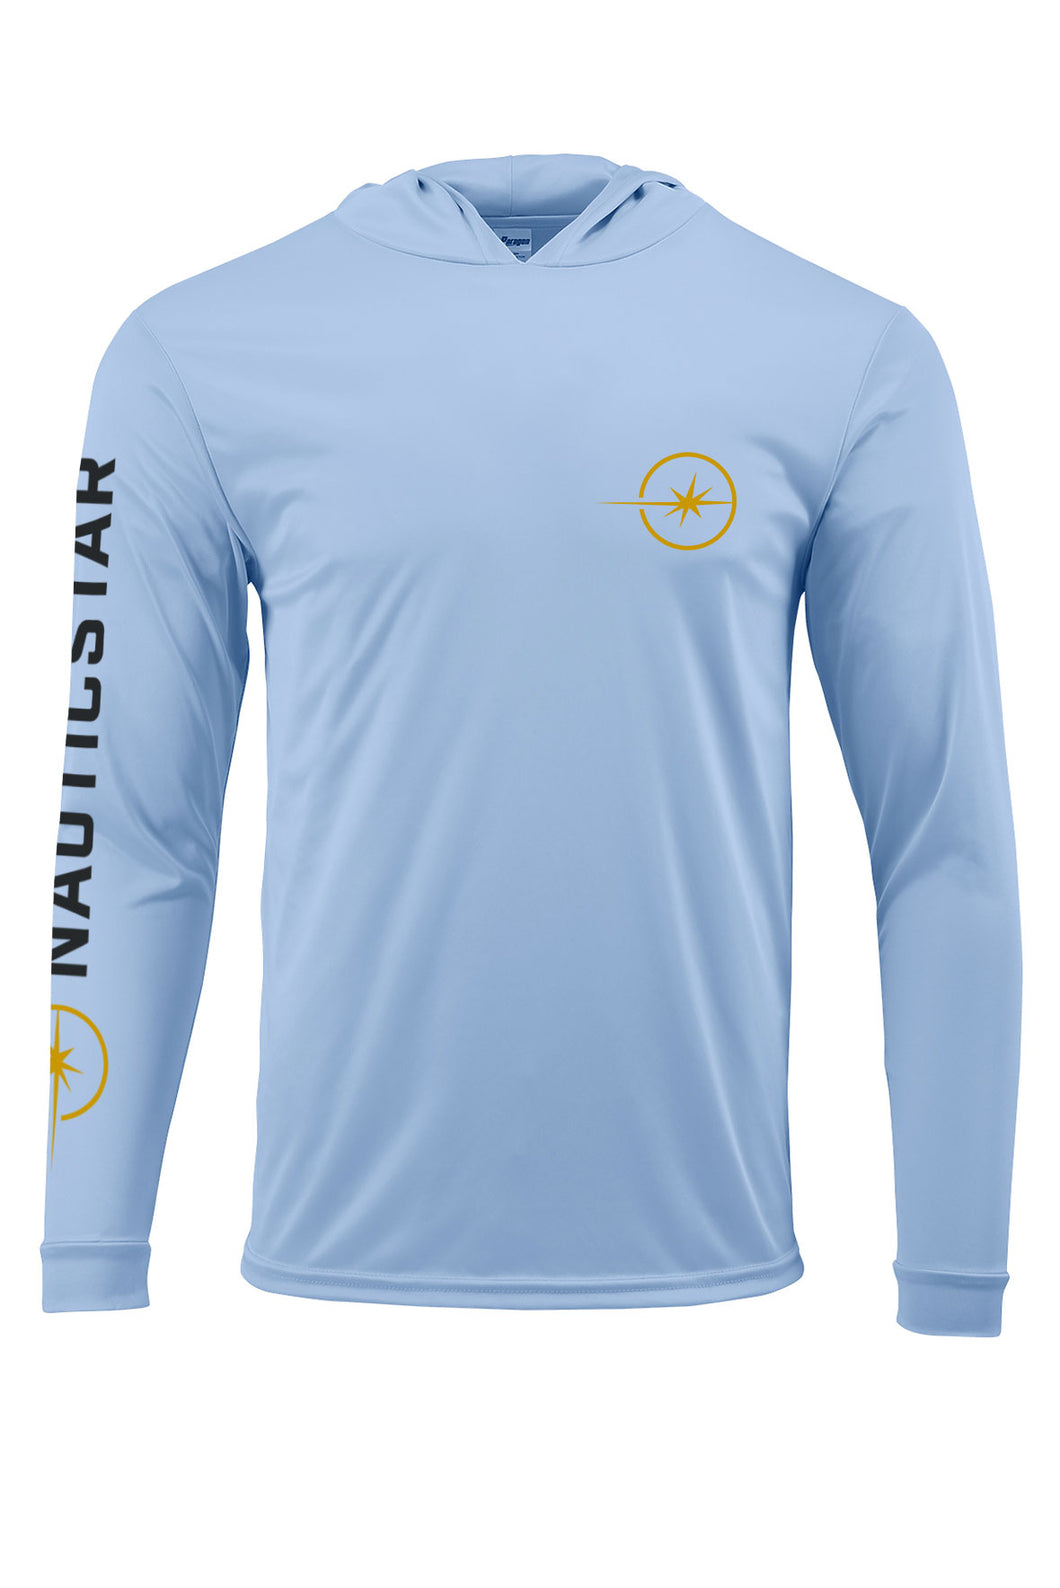 NauticStar UPF Hooded Long Sleeve Shirt - Light Blue